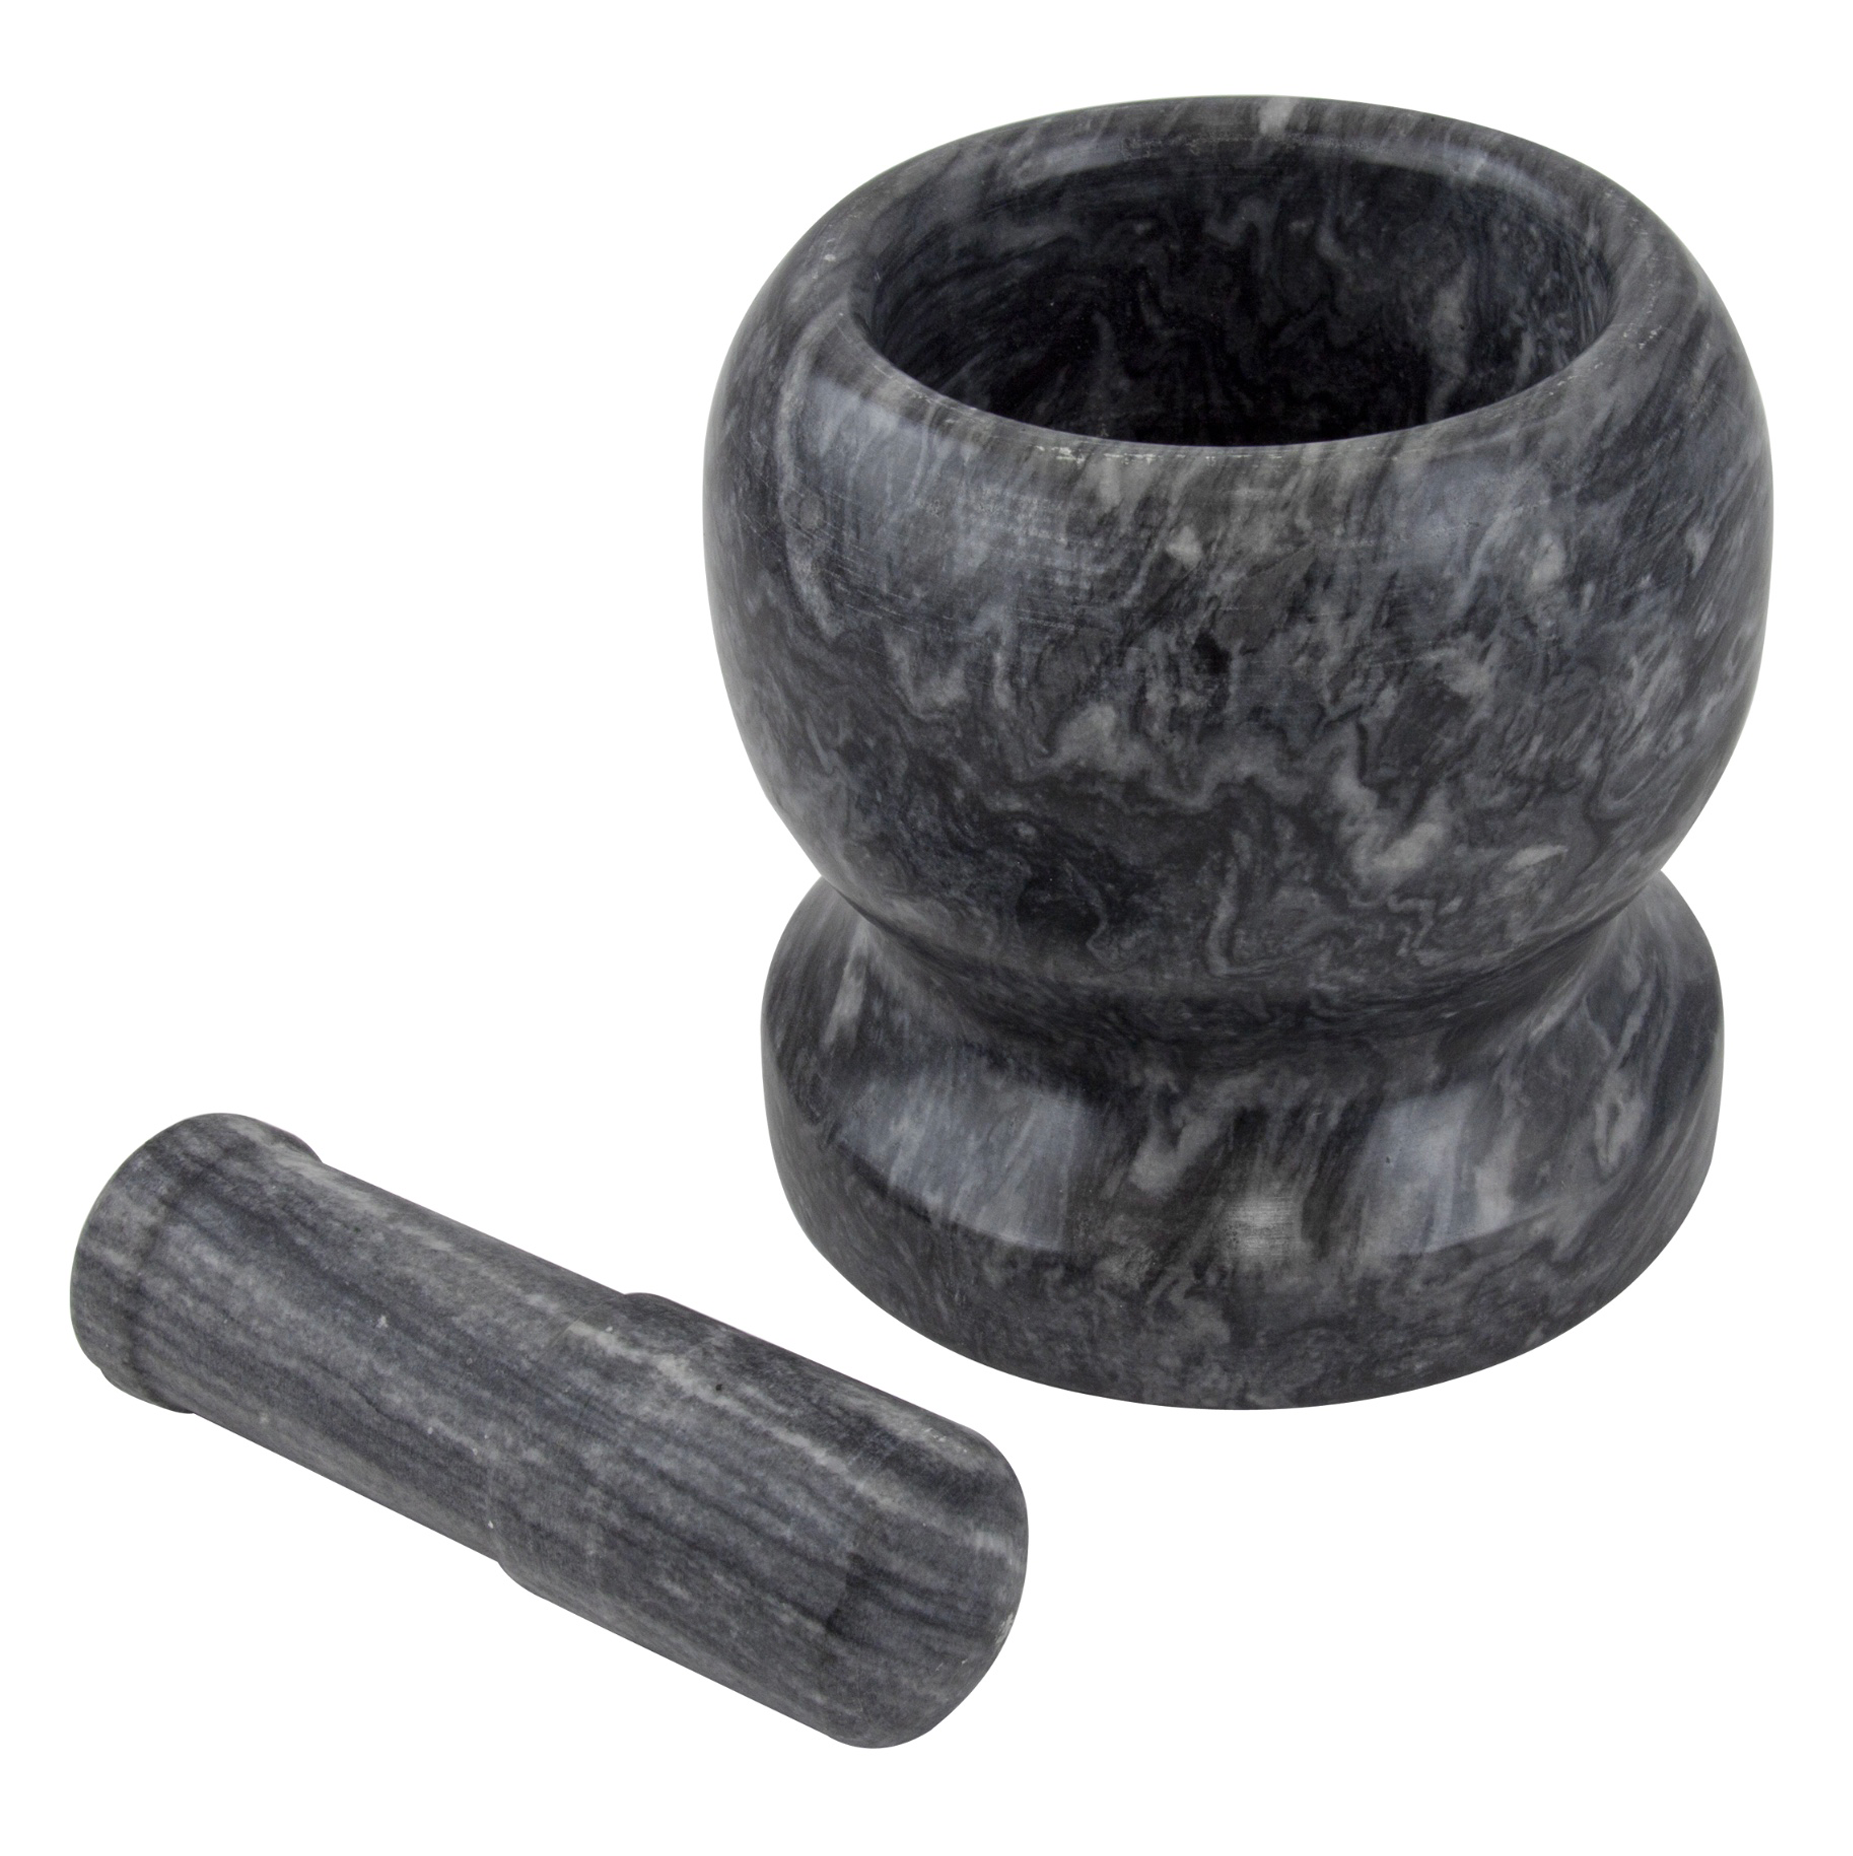 Mortar & Pestle - Black Marble - 13cm